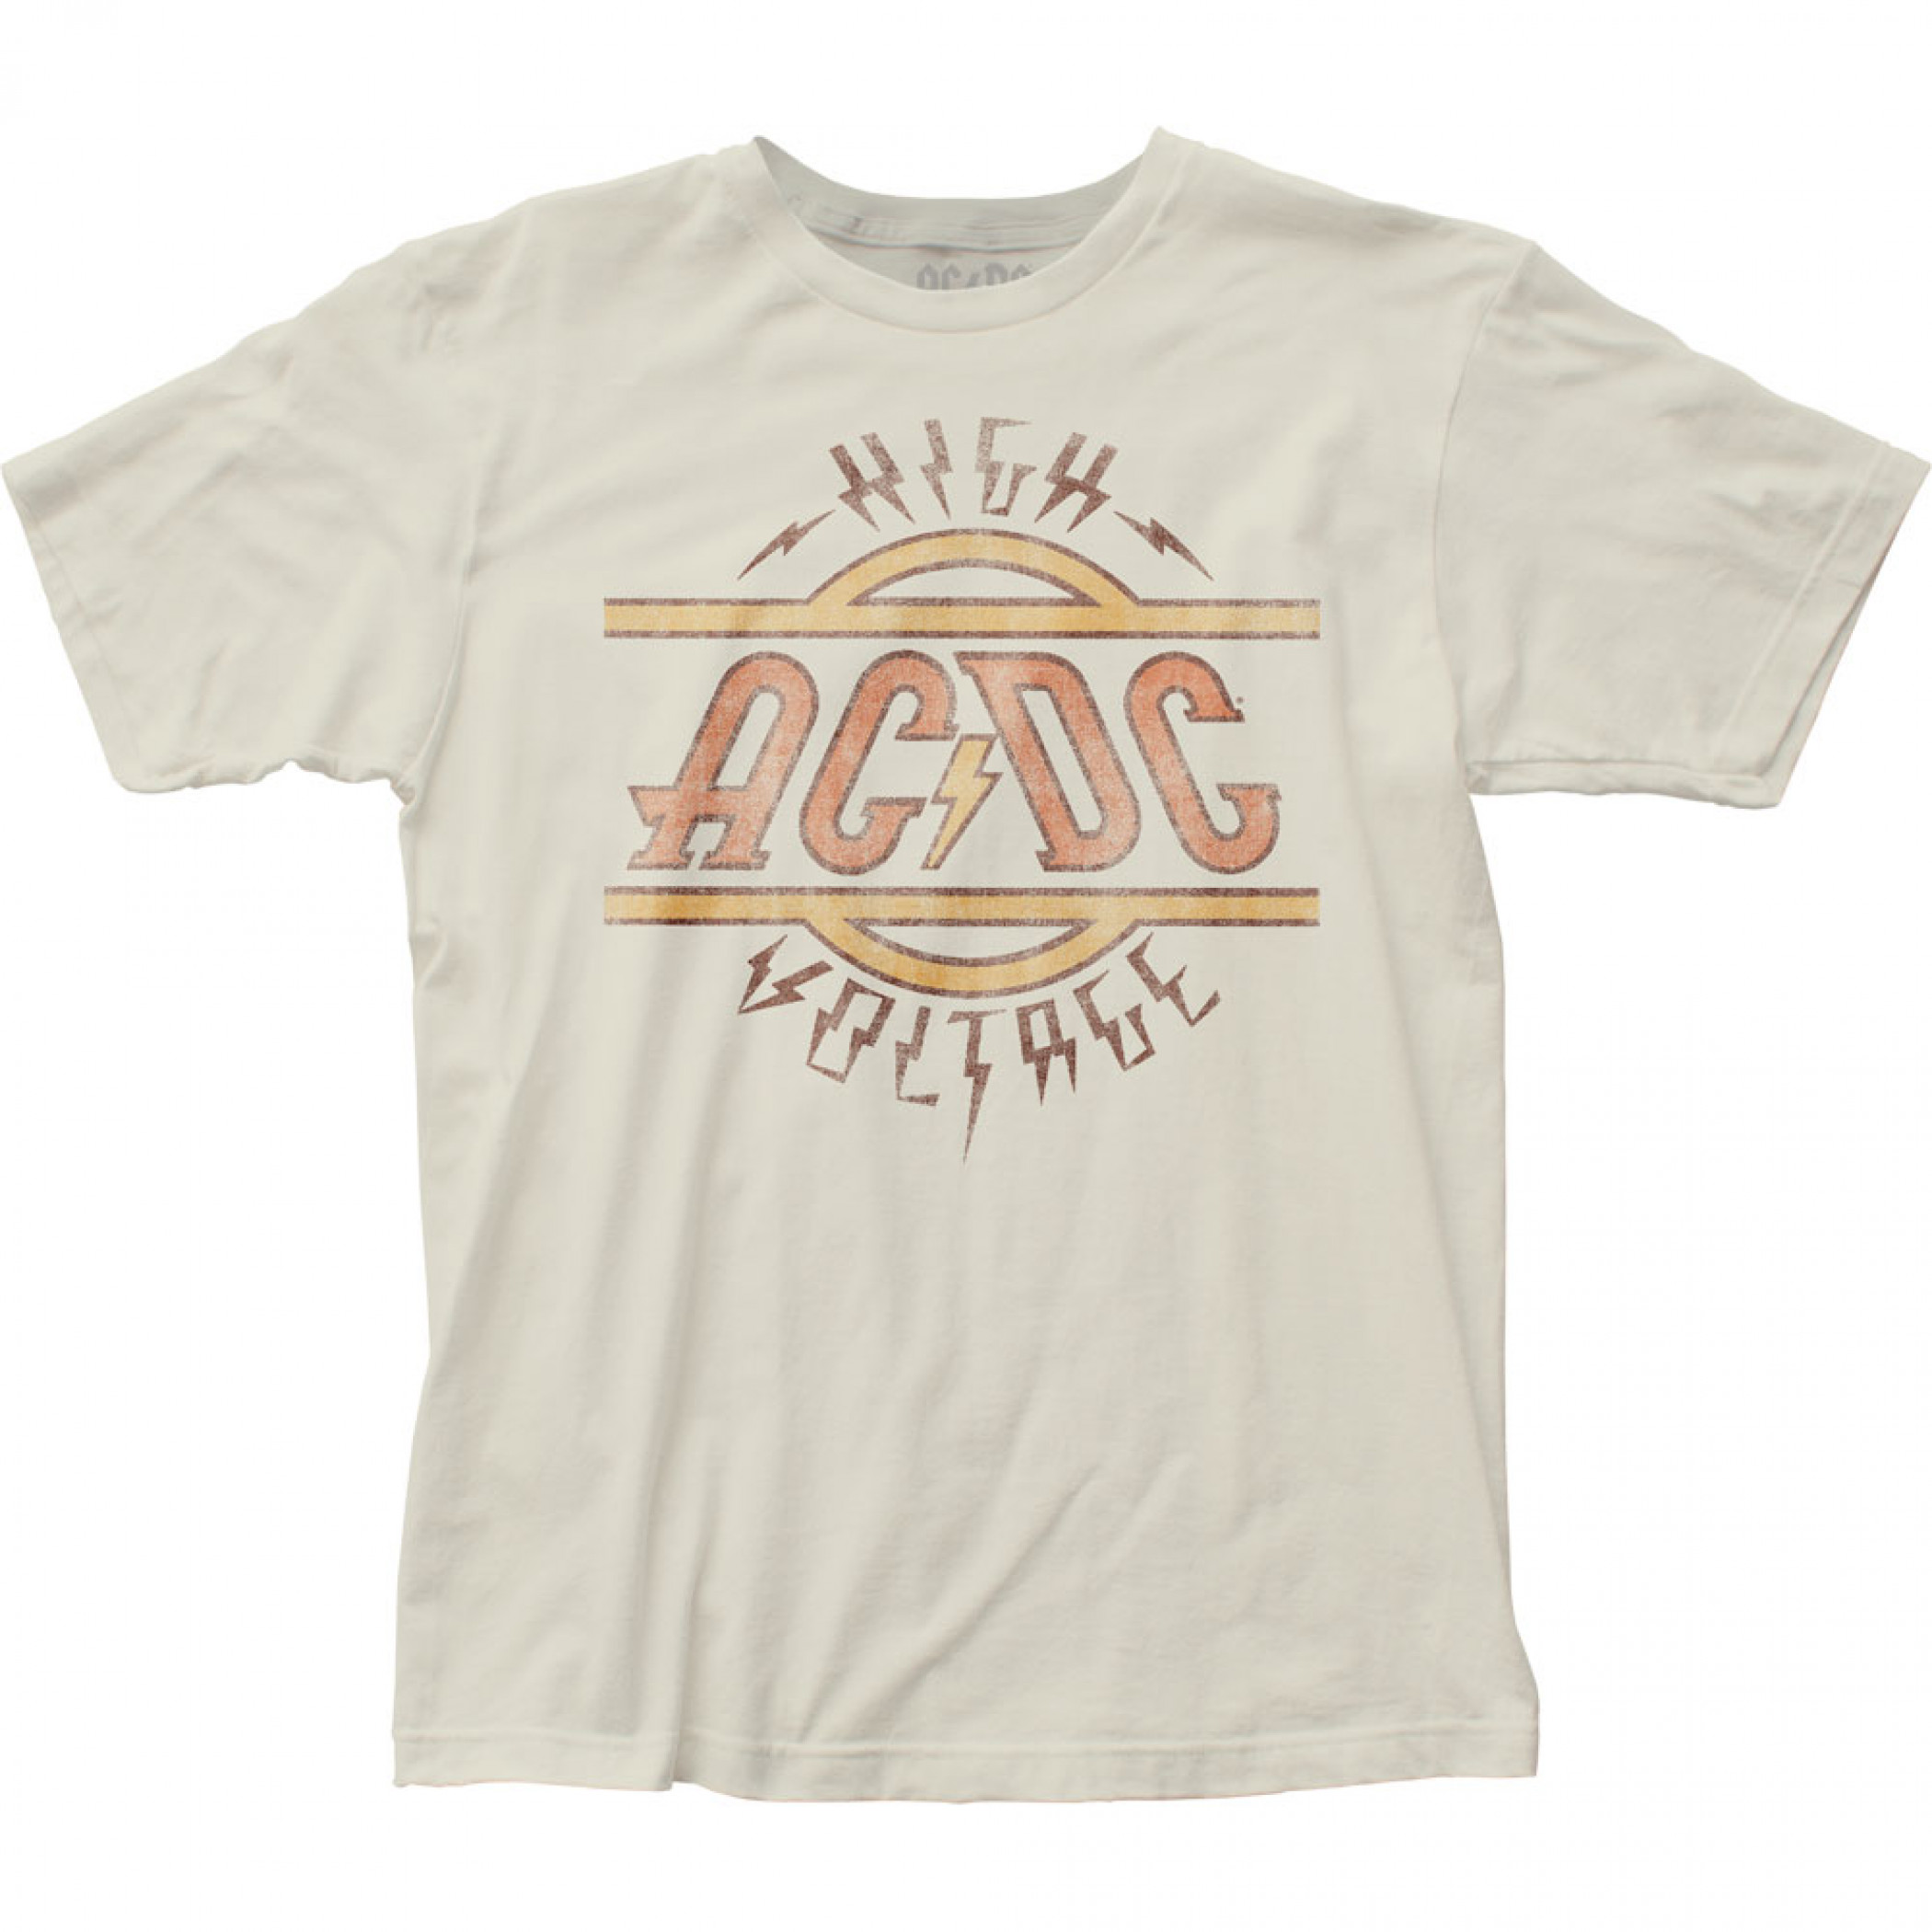 Ac dc high. Футболка AC DC High Voltage. Футболка ACDC Voltage. Винтажные футболки AC/DC. Футболка AC DC Винтаж.